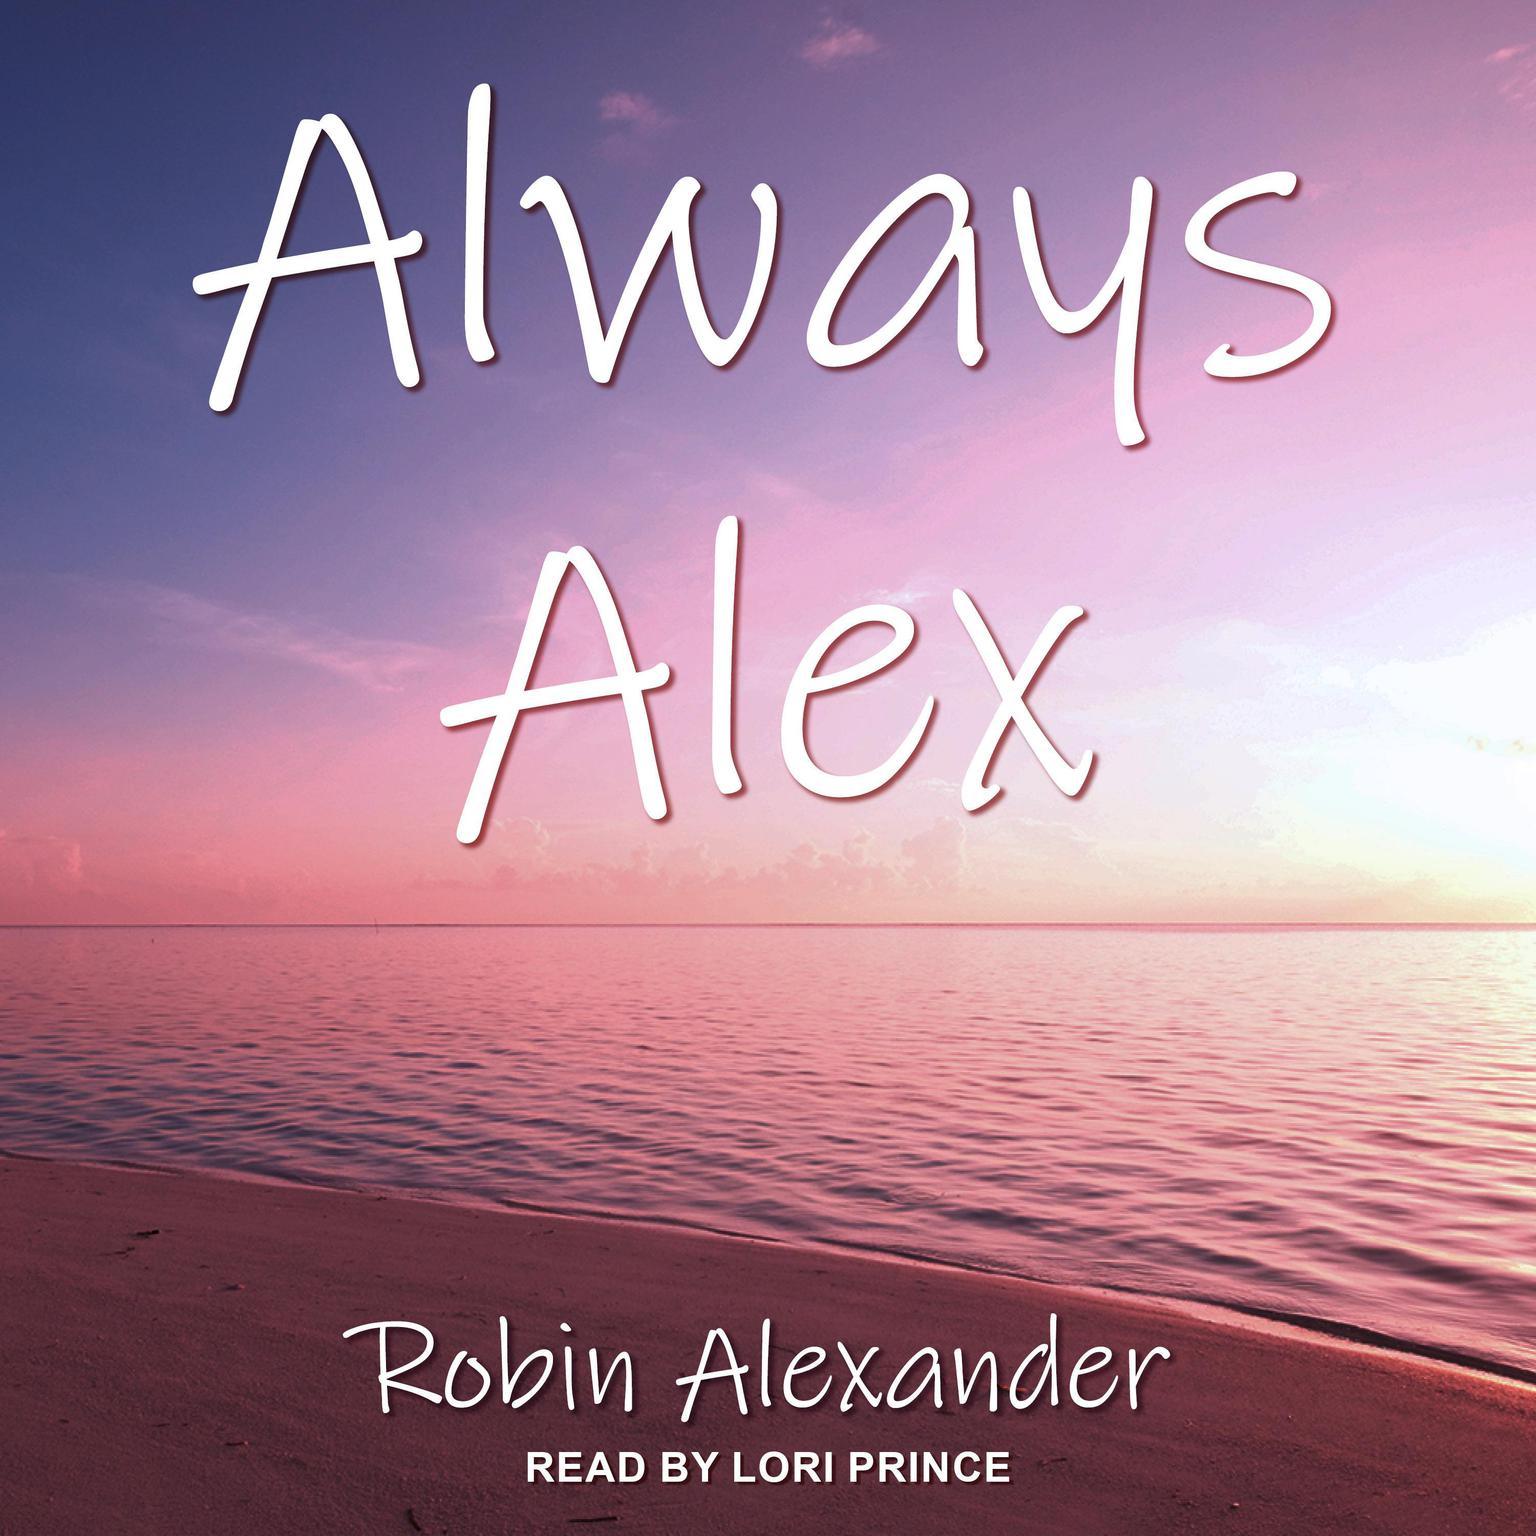 Robin Alexander, Lori Prince: Always Alex (AudiobookFormat, 2014, Intaglio)